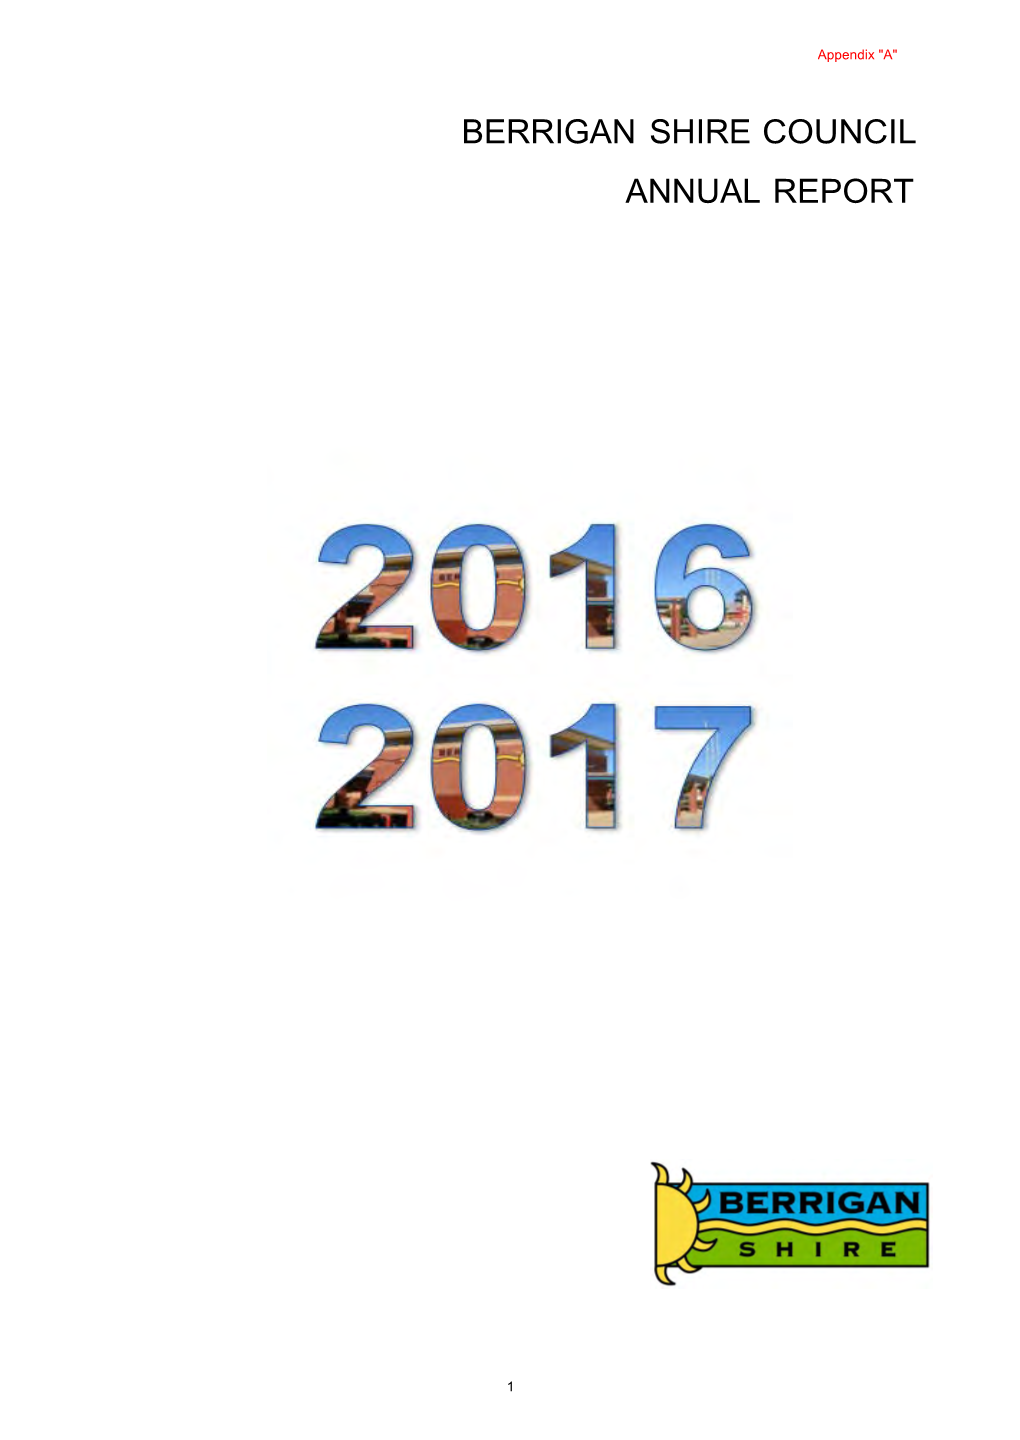 Berrigan Shire Council Annual Report